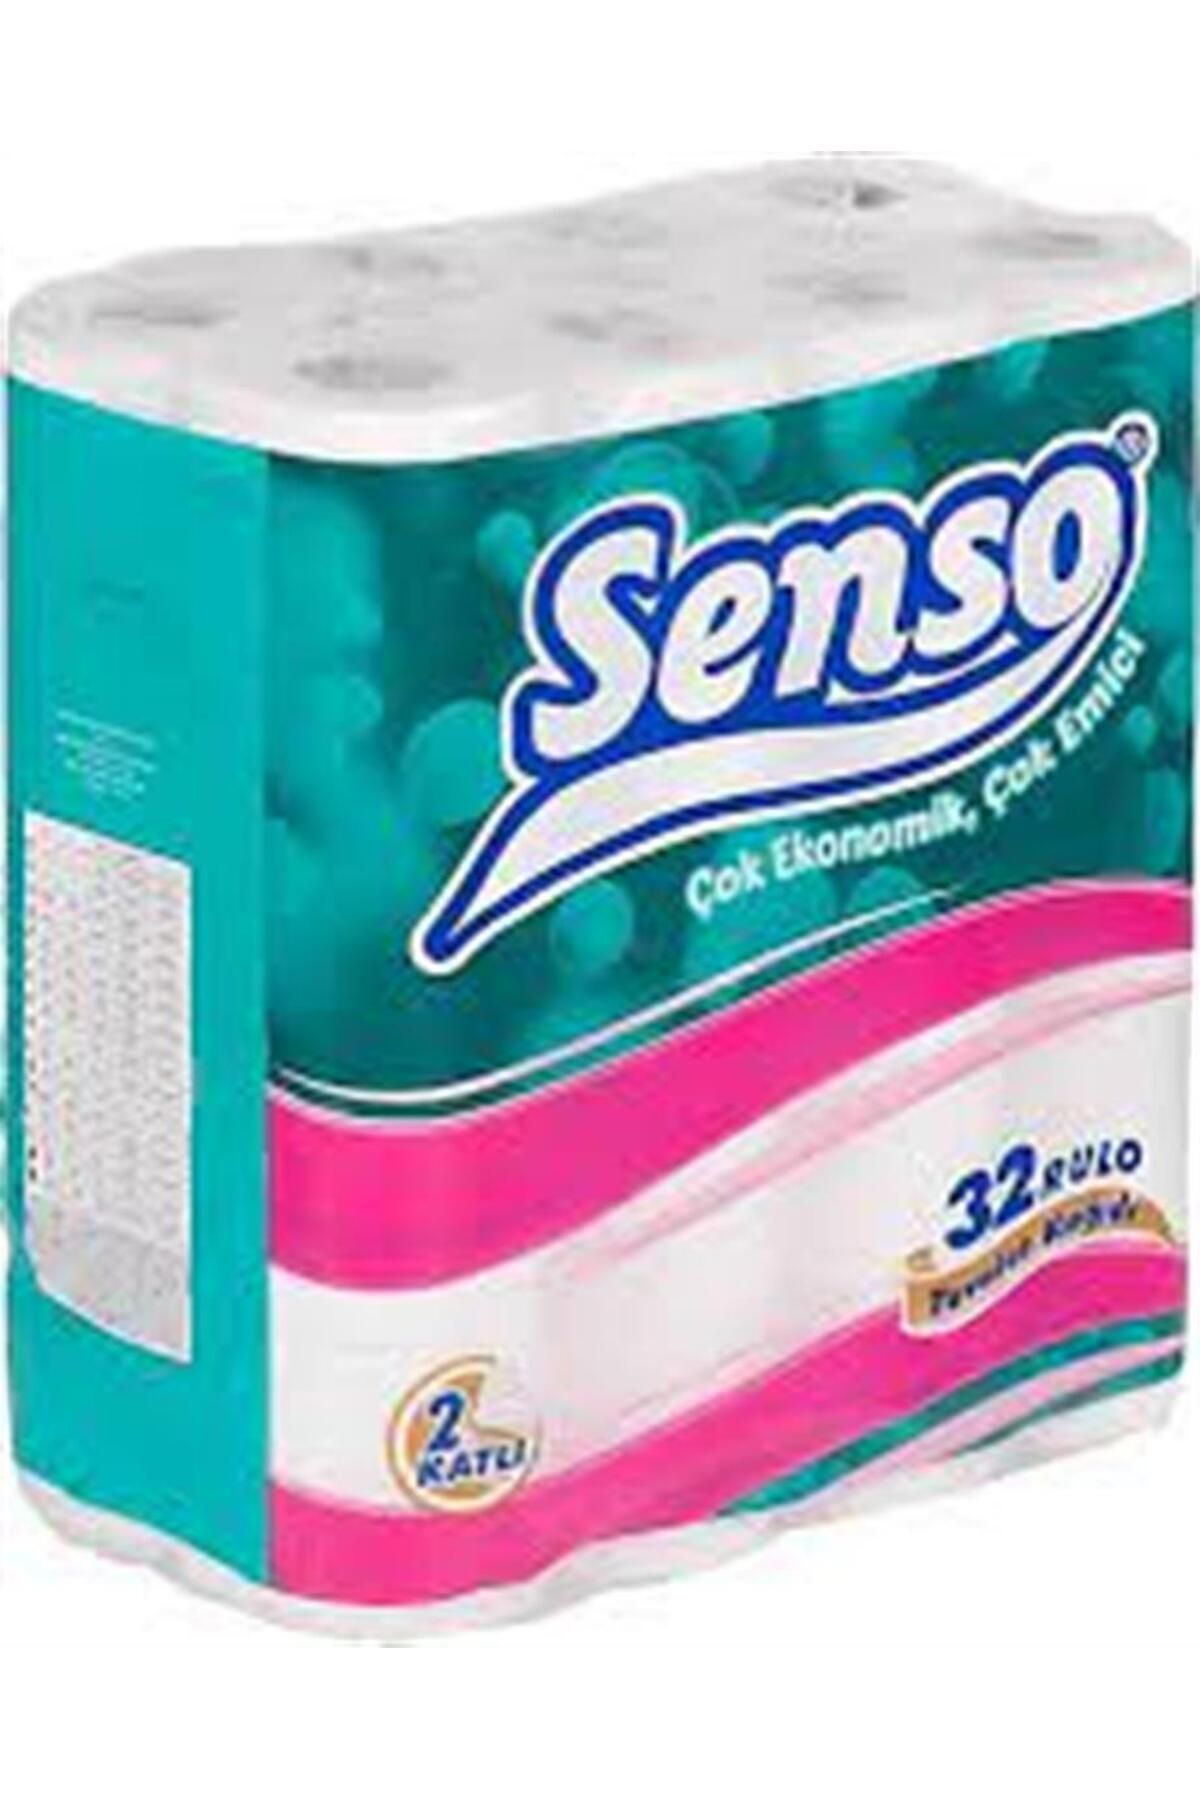 Senso Tuvalet Kağıdı 2 Katlı 32 Rulo